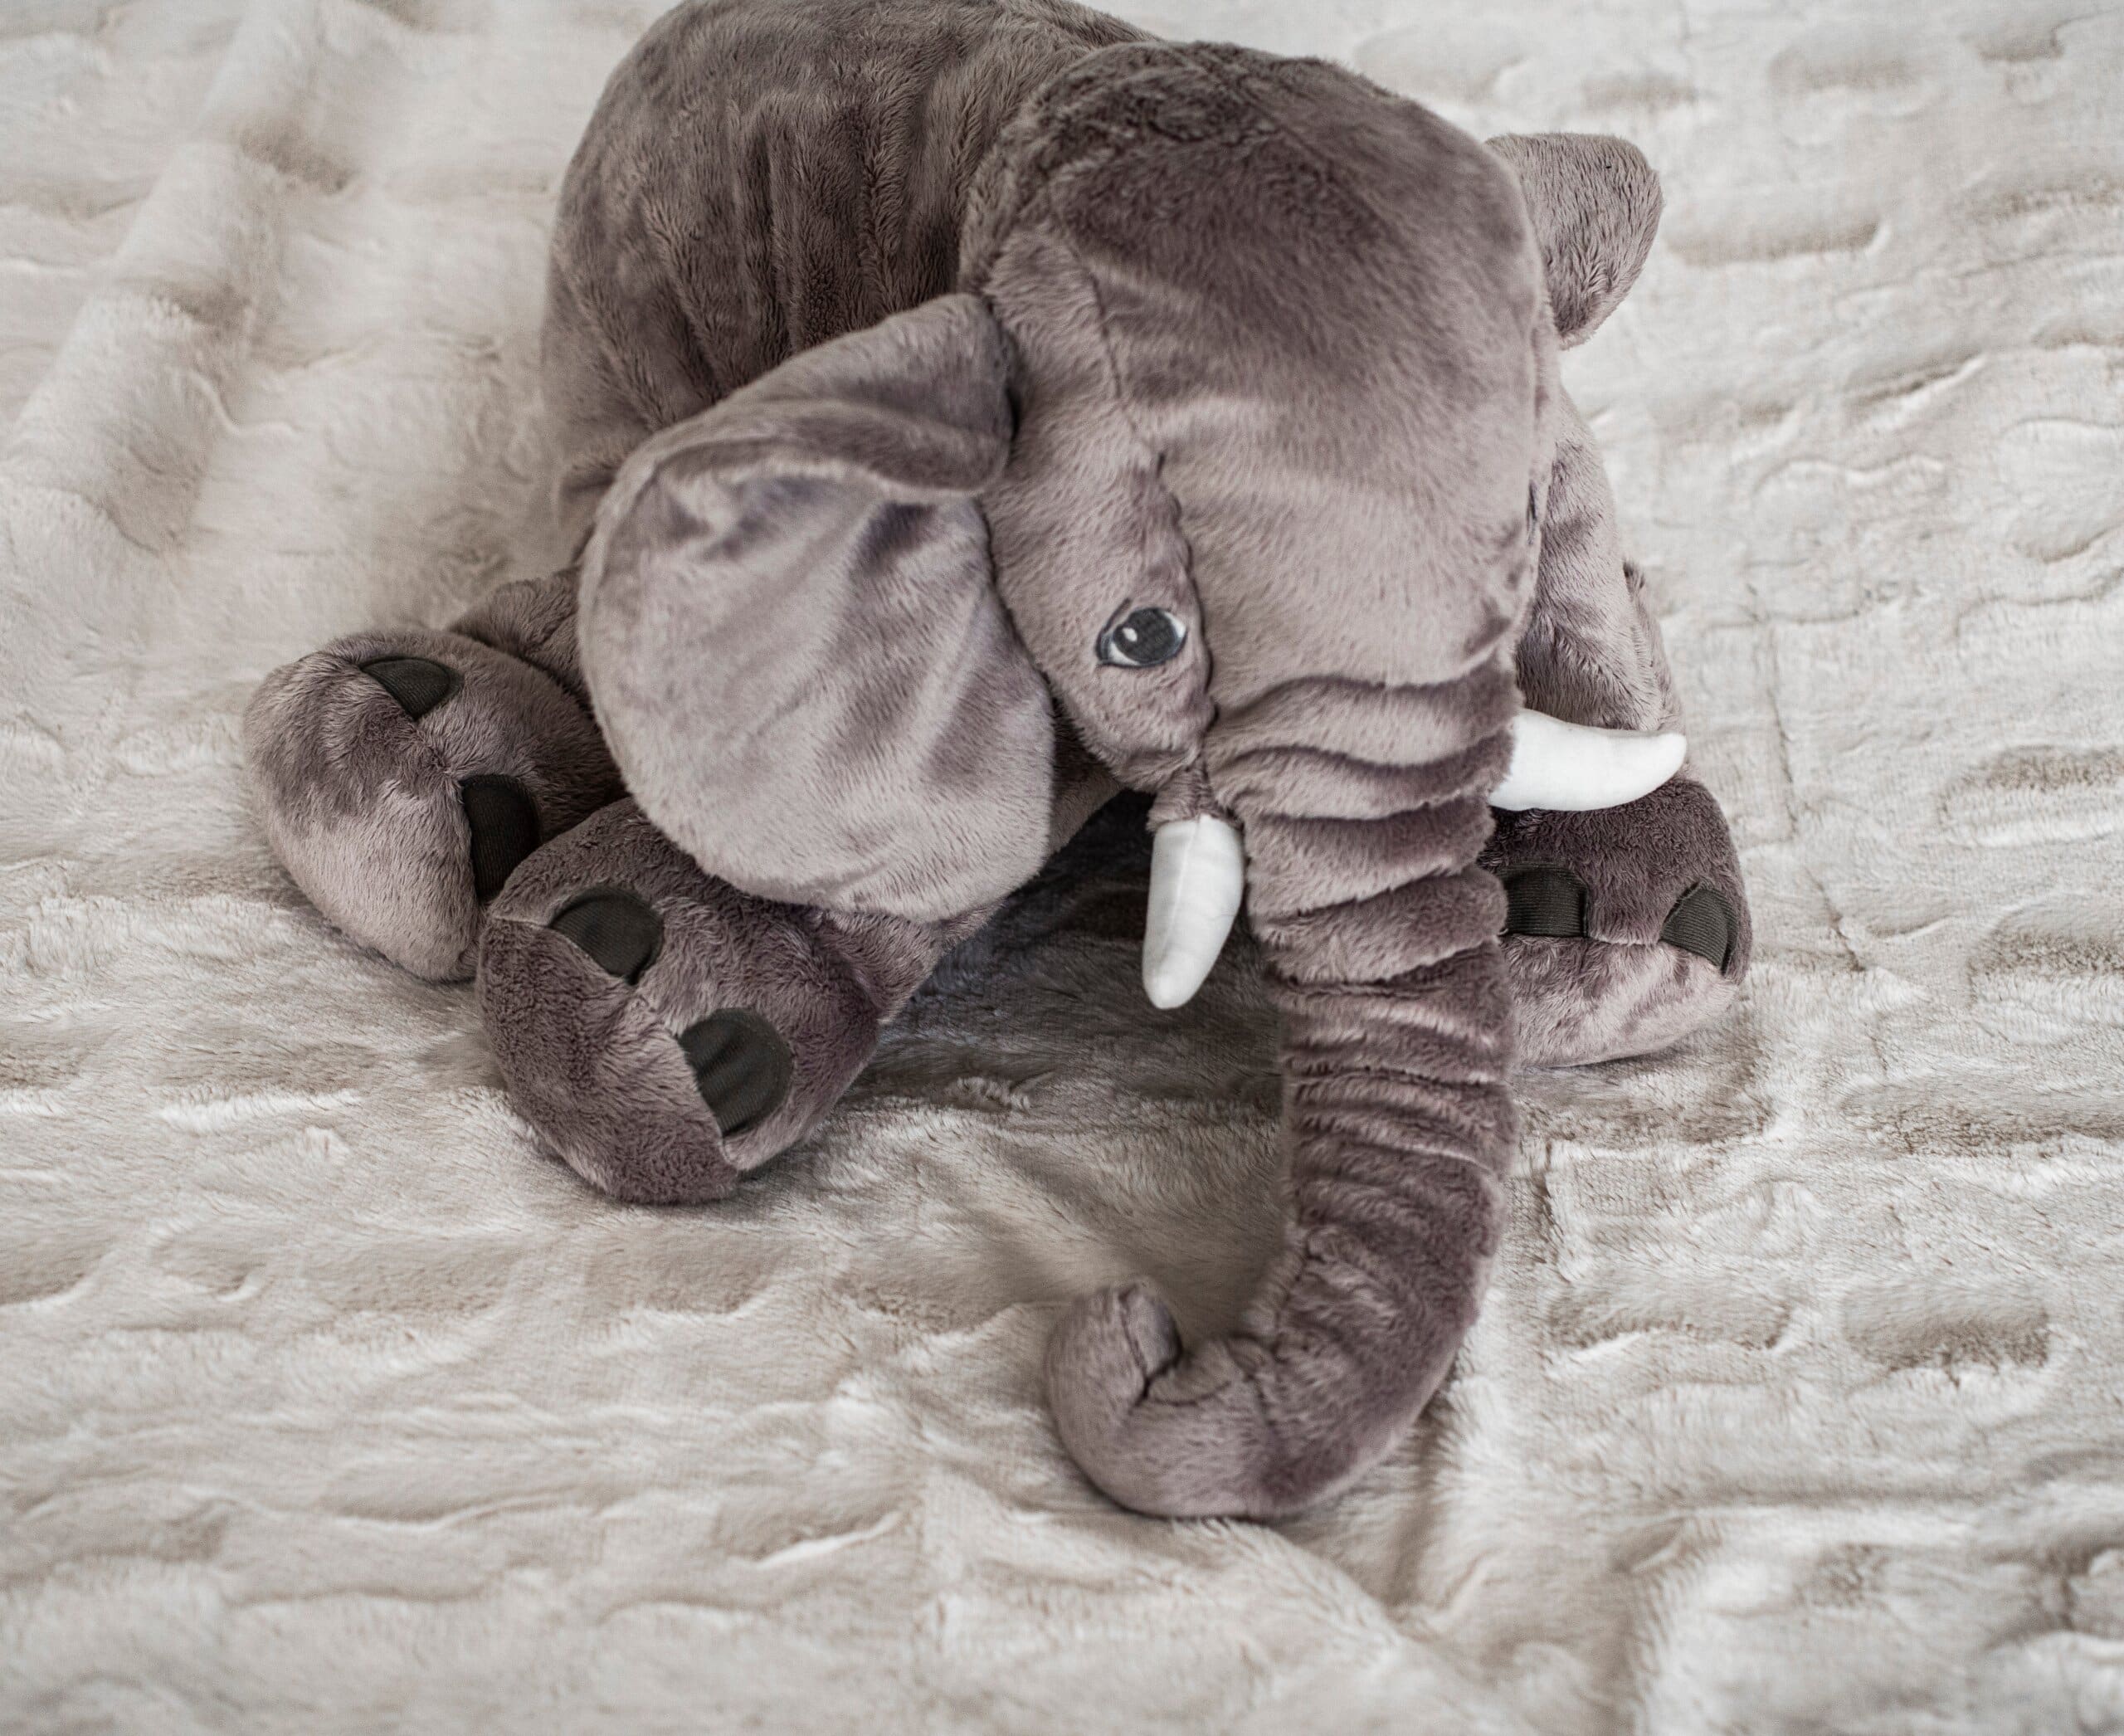 Elephant soft toy similar to Molly Mae's Ellie Belly.